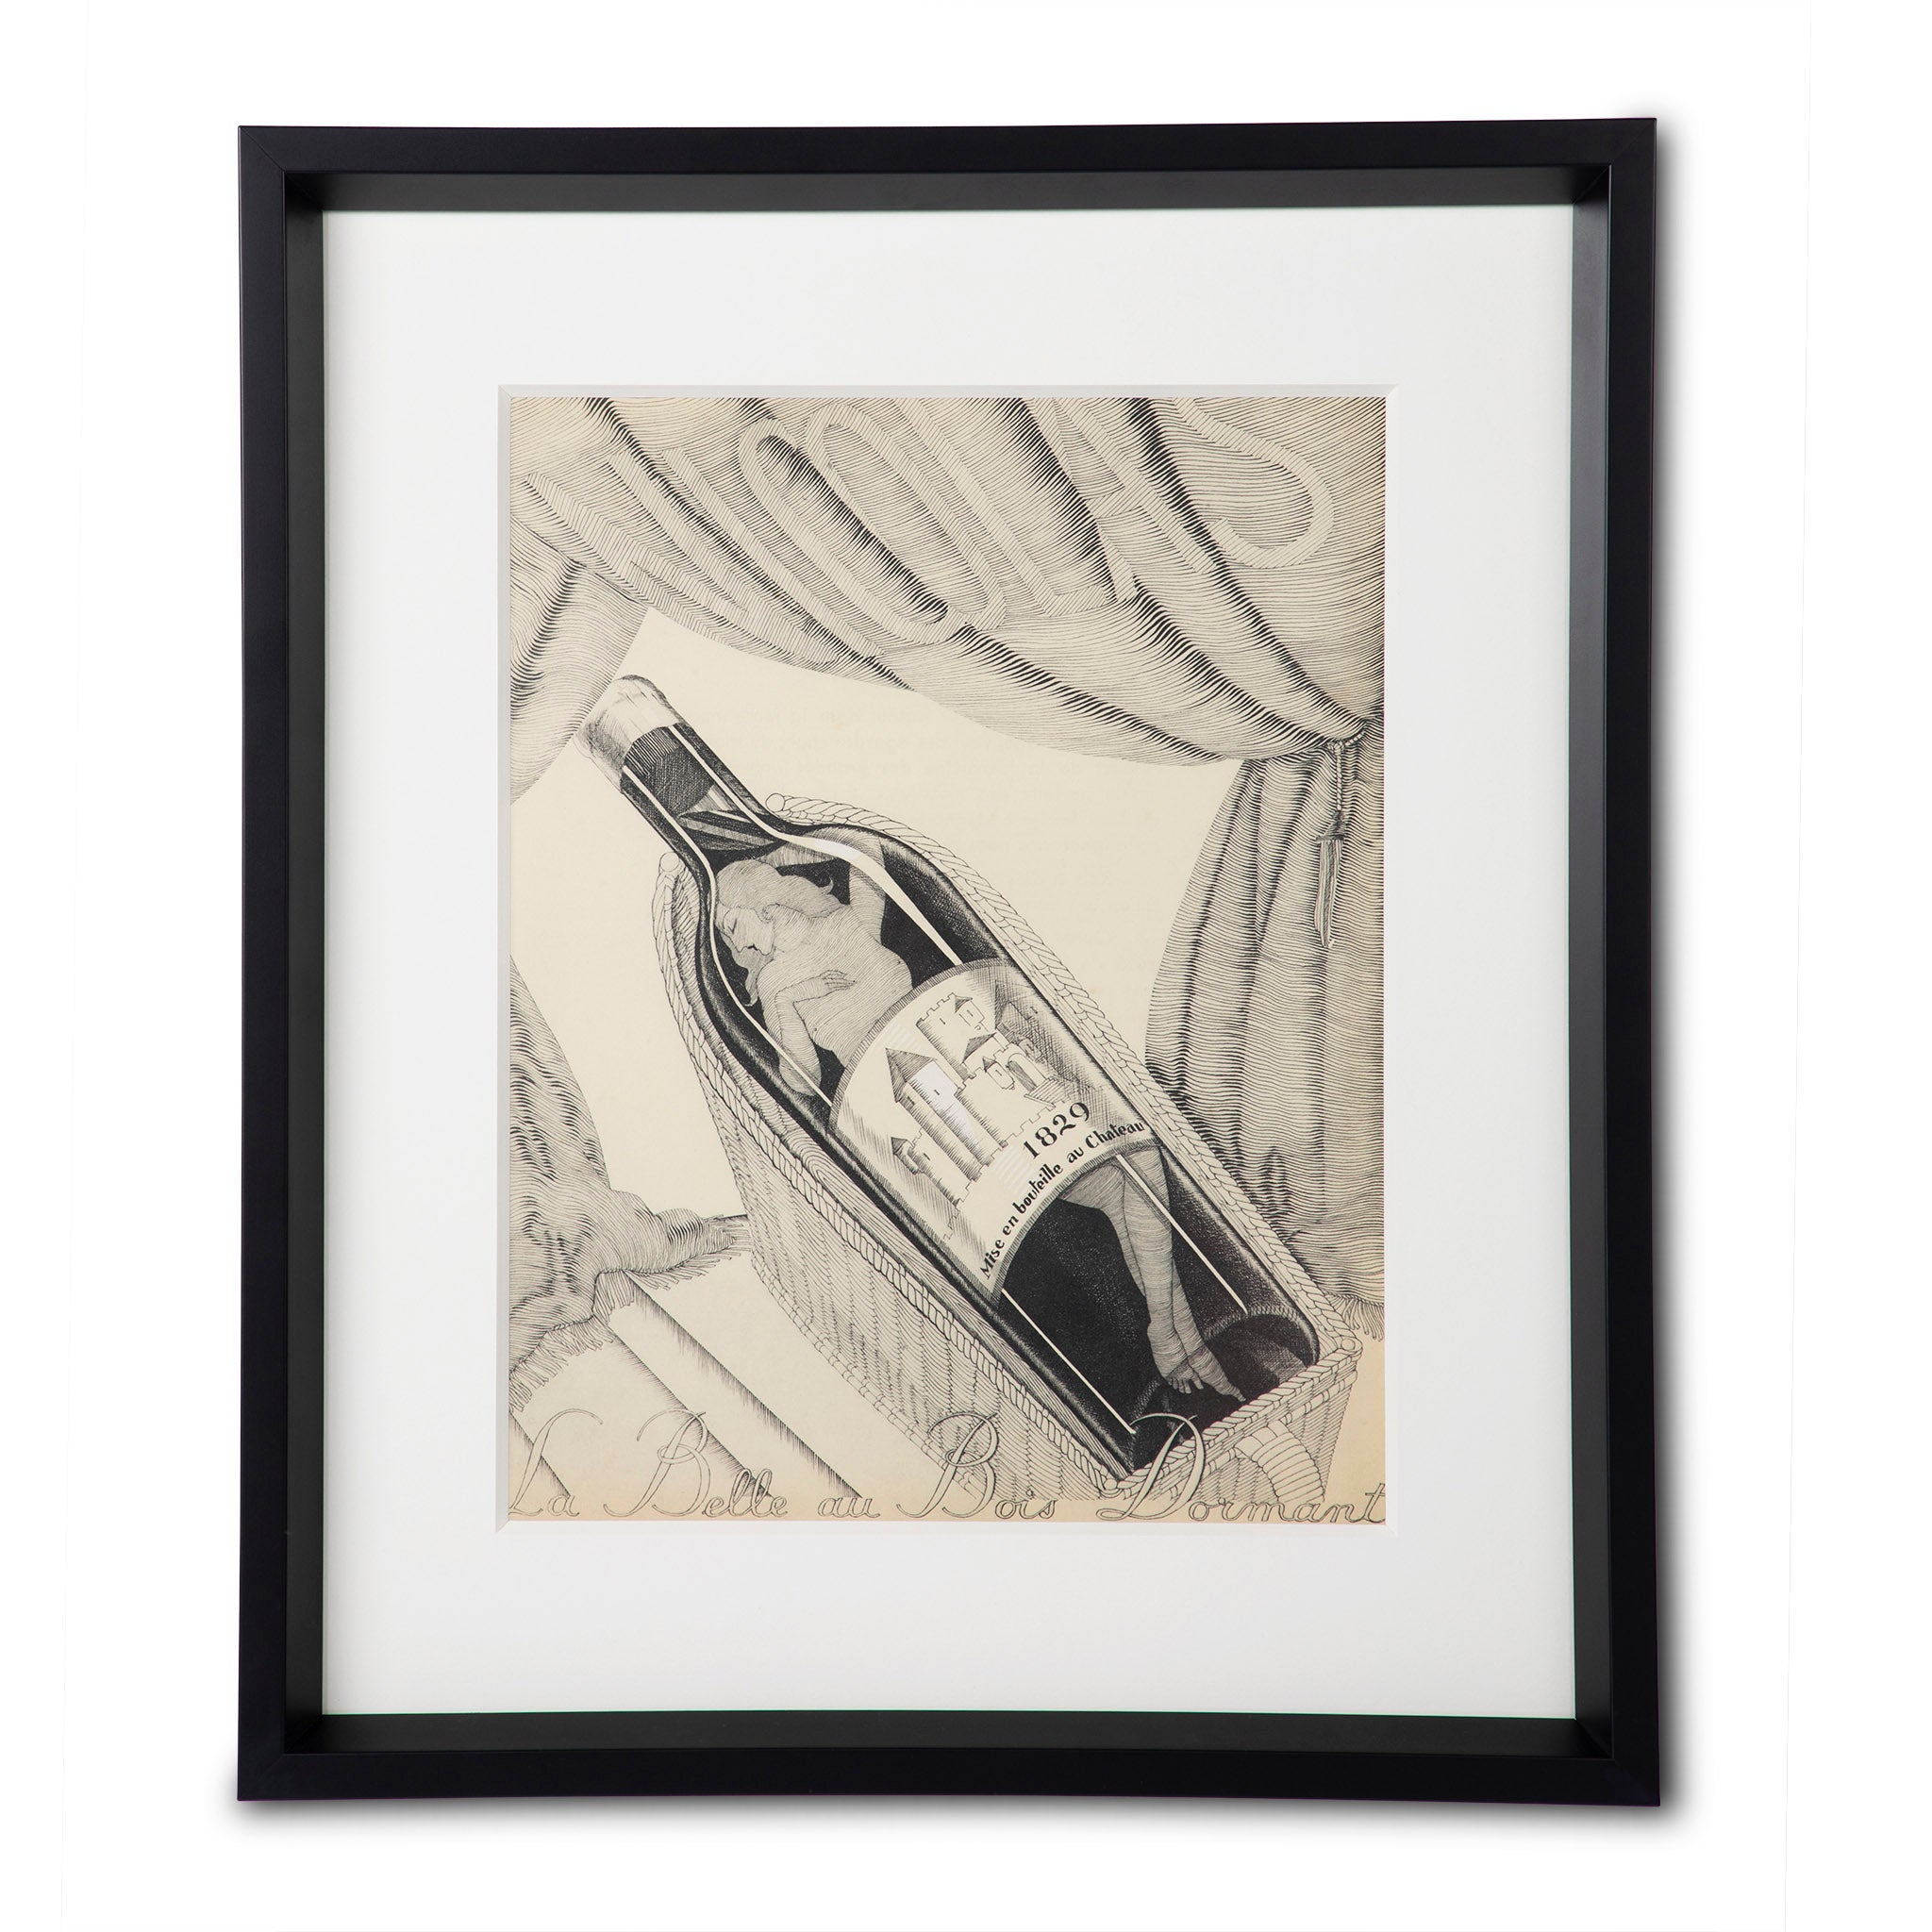 Nicolas - Wine Bottle by Paul Iribe, Original Lithograph